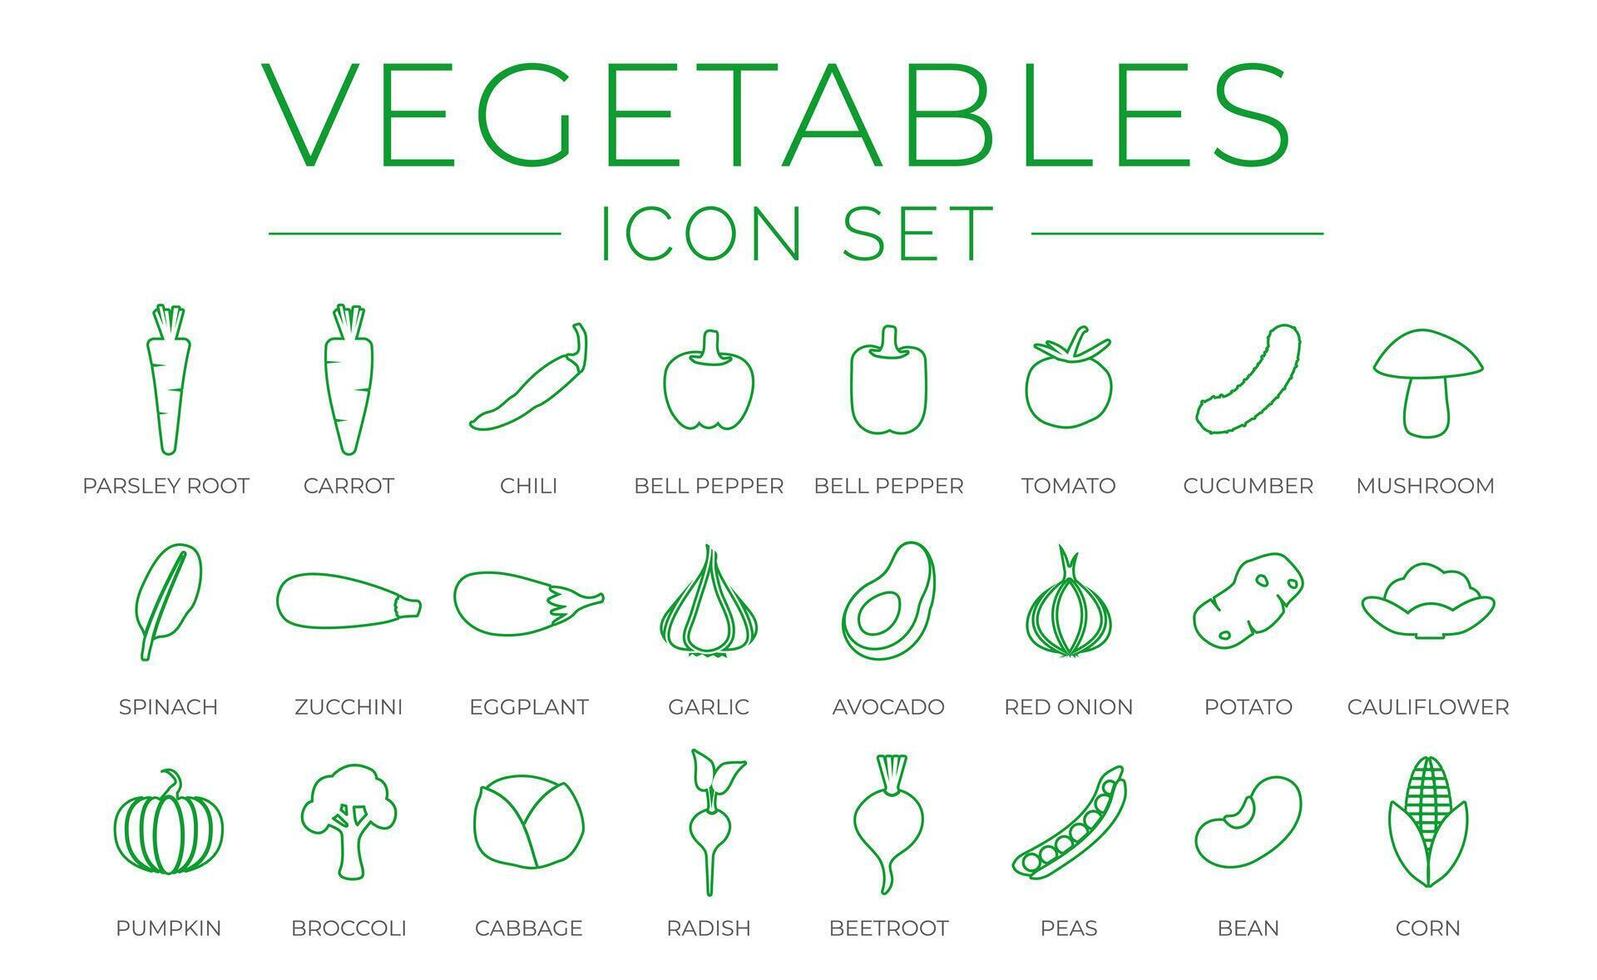 Outline Vegetables Icon Set of Tomato, Cucumber, Mushroom, Spinach, Eggplant, Garlic, Onion, Potato, Tomato, Avocado, Cauliflower, Pumpkin, Broccoli, Cabbage, Radish, Beetroot, Peas, Bean, Corn Icons vector